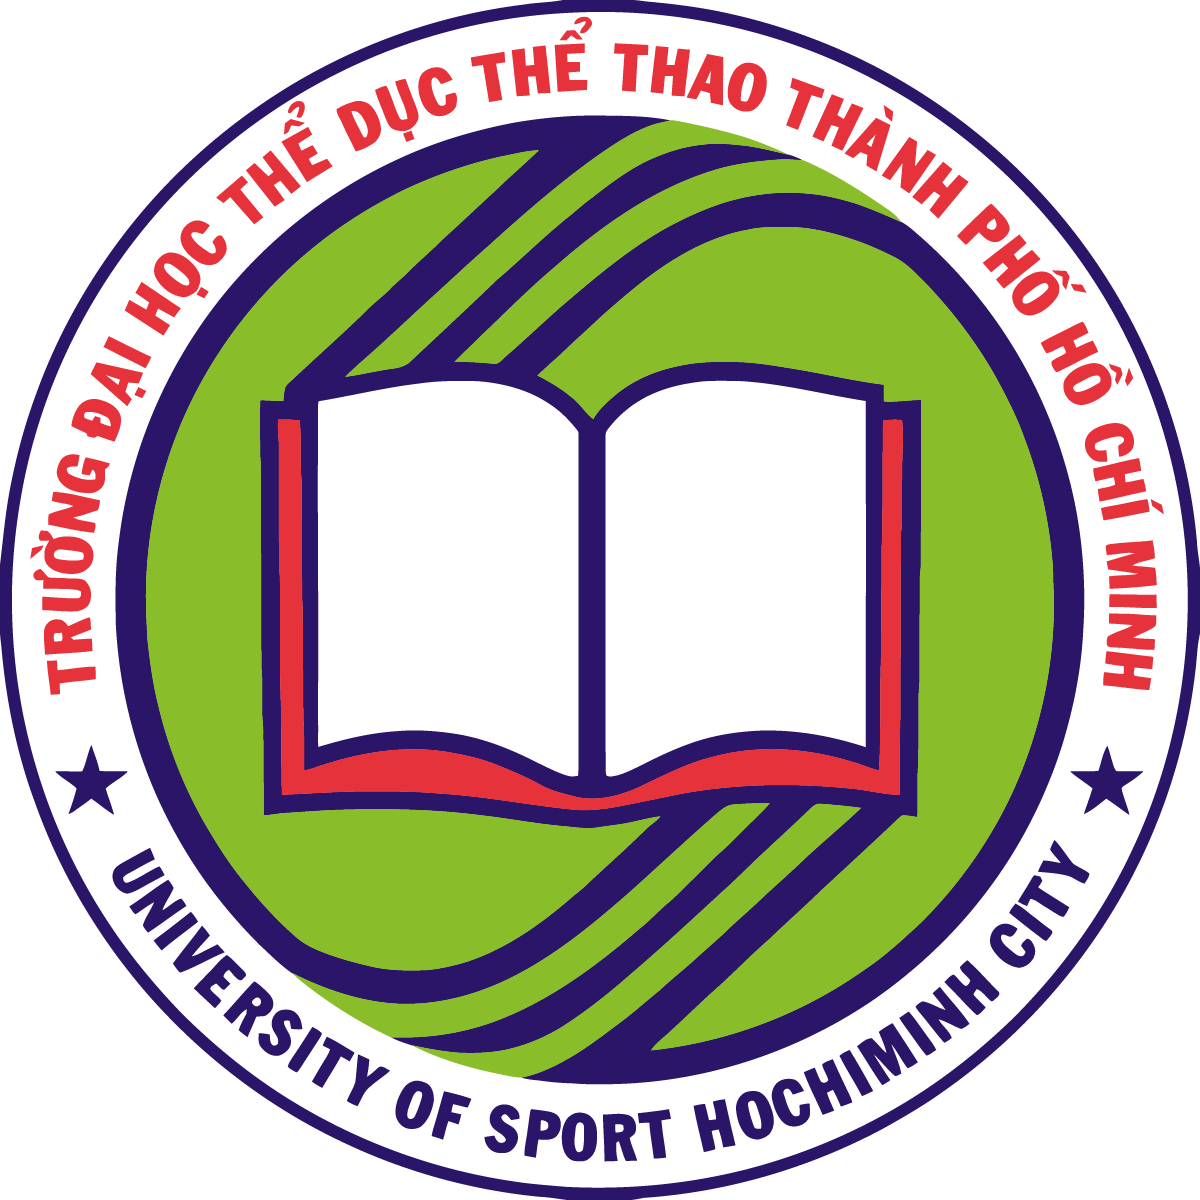 Logo Truong Dai hoc The duc the thao Thanh pho Ho Chi Minh